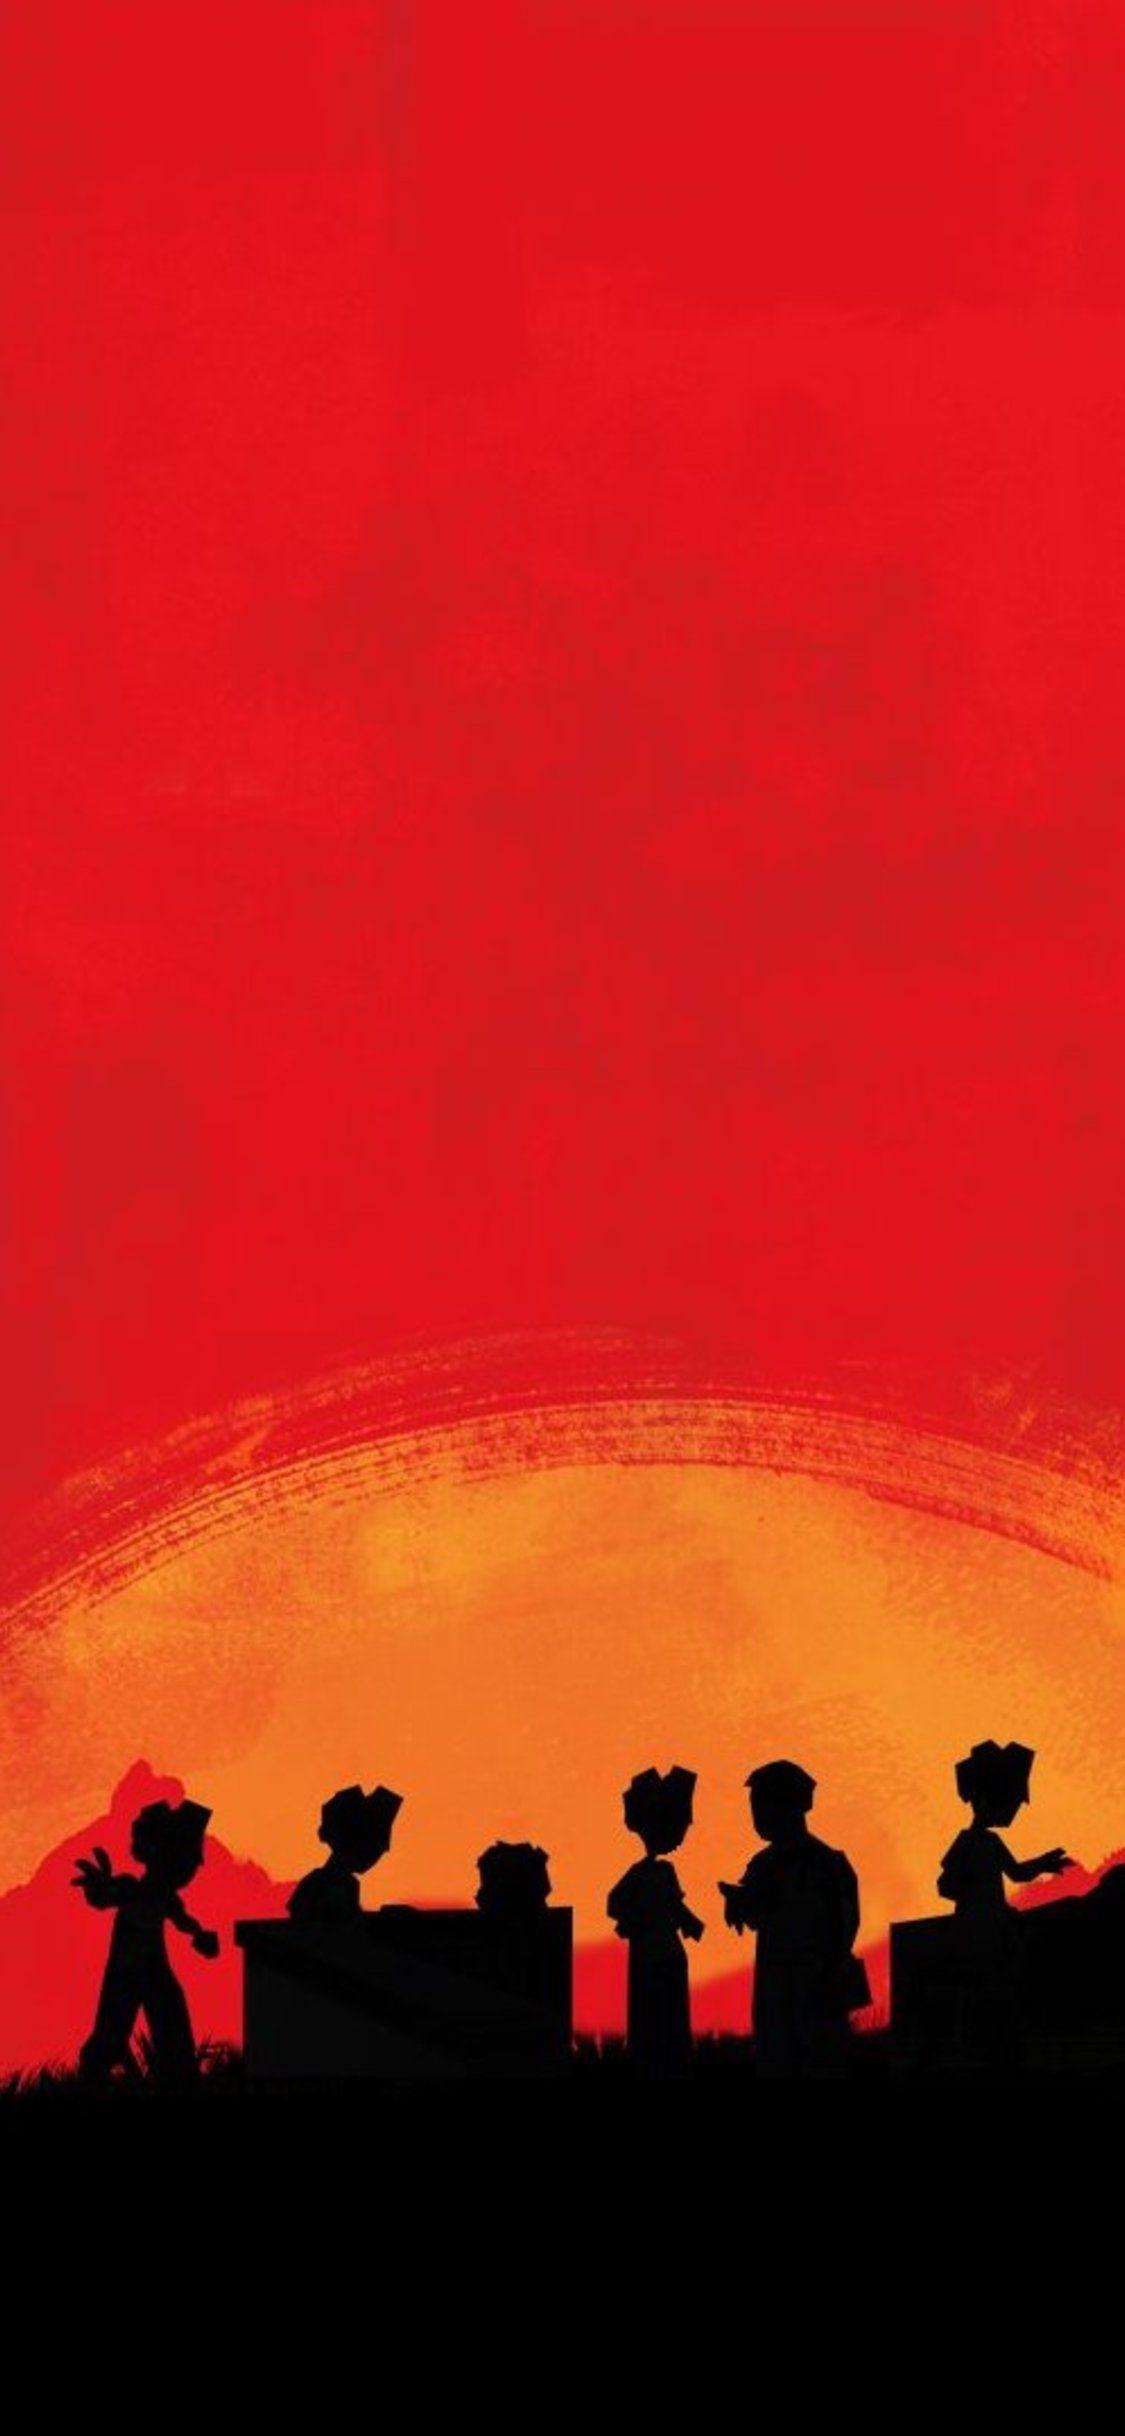 Red Dead Redemption 2 Wallpaper Iphone The Best Hd Wallpaper